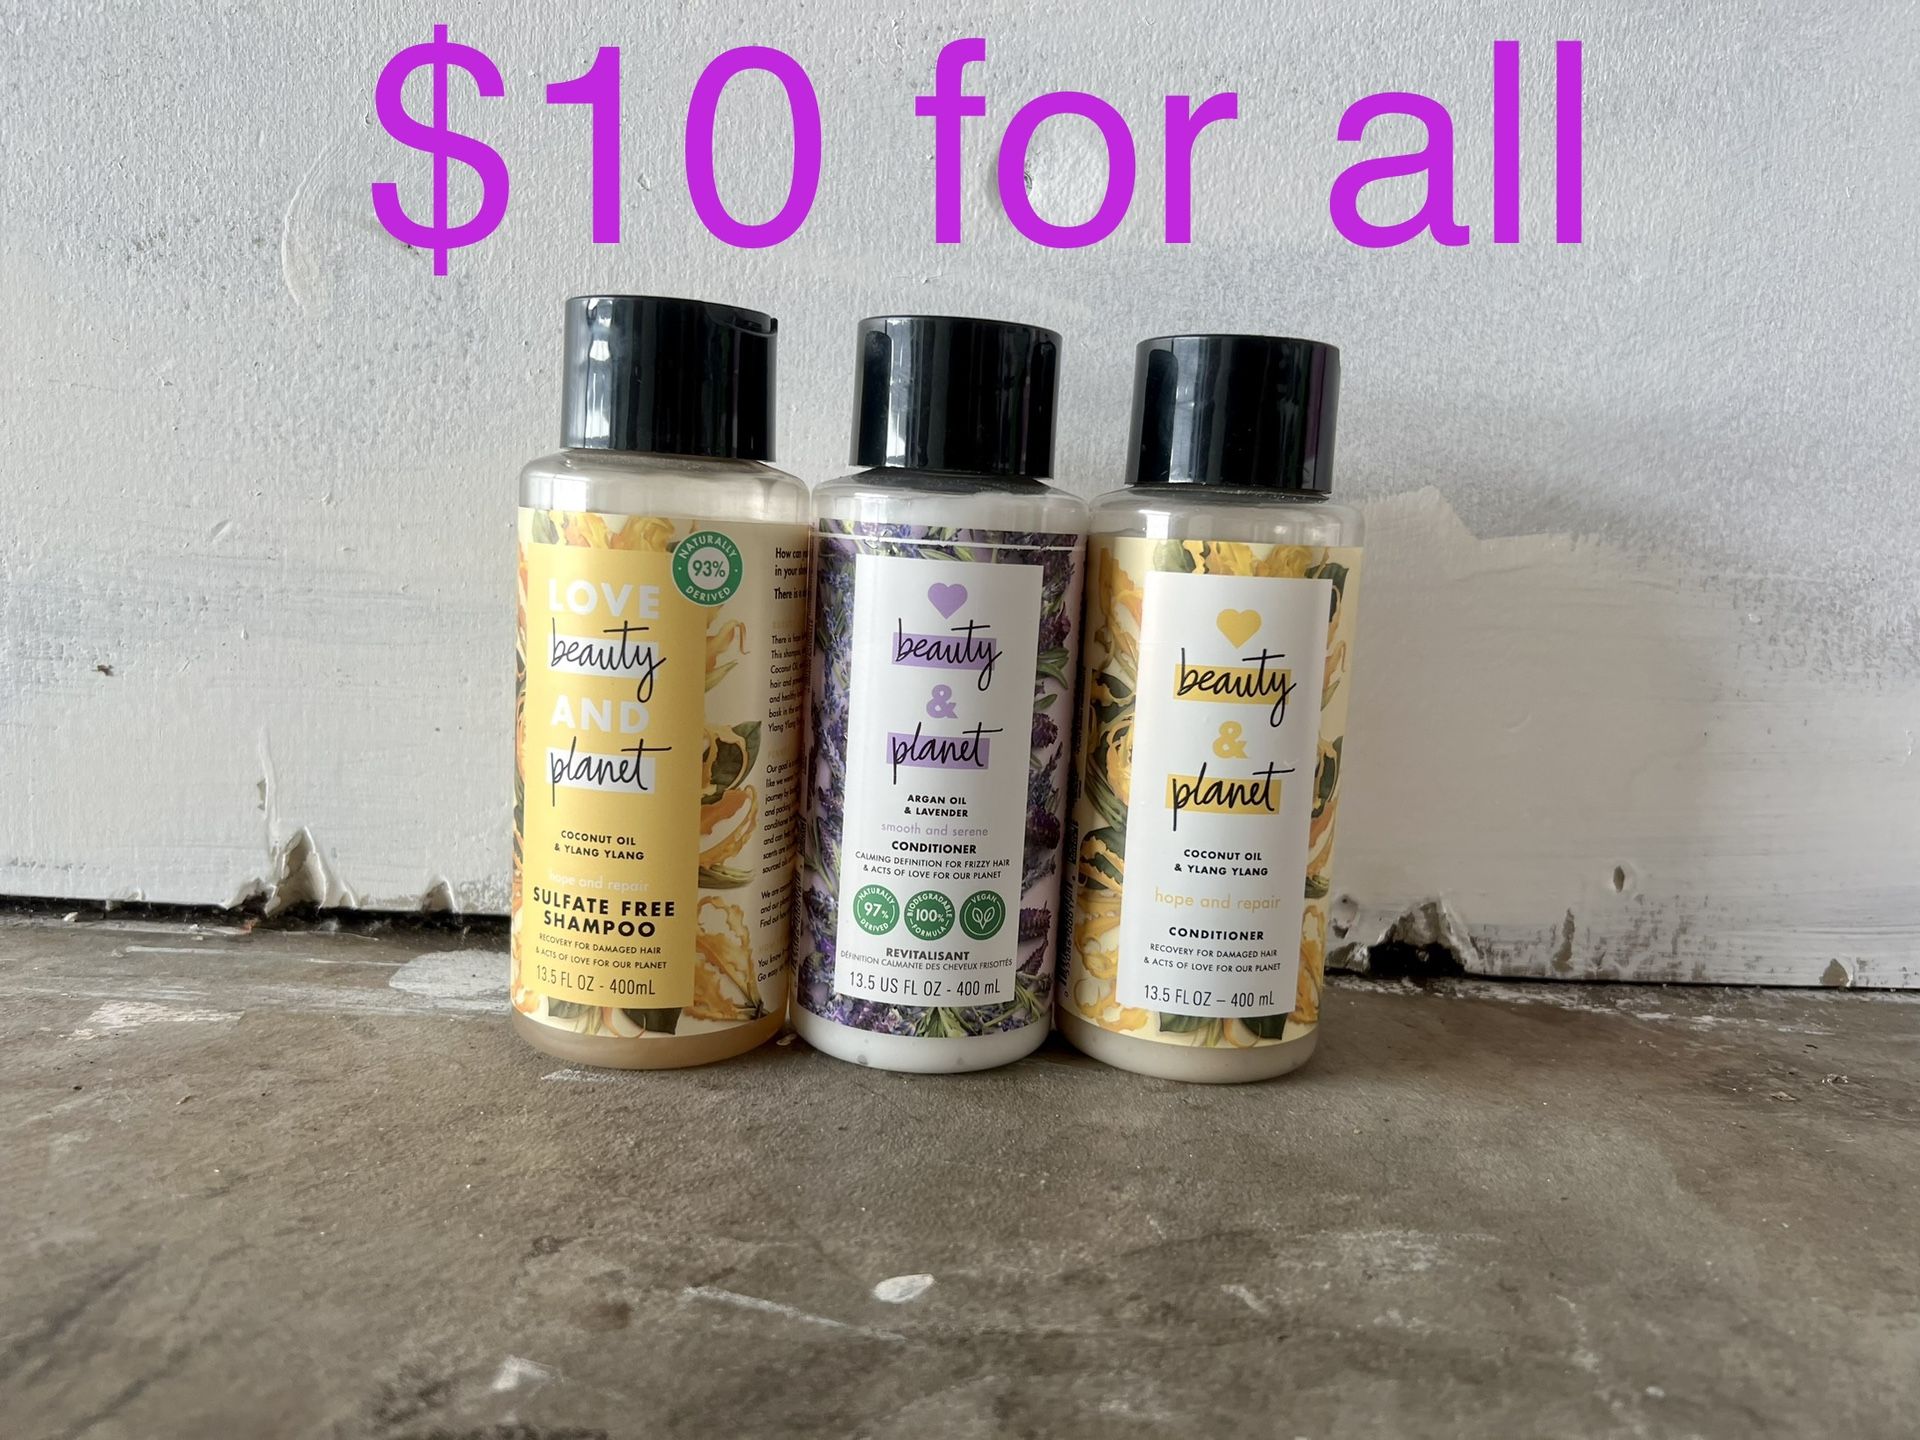 Shampoo And Conditioner $10